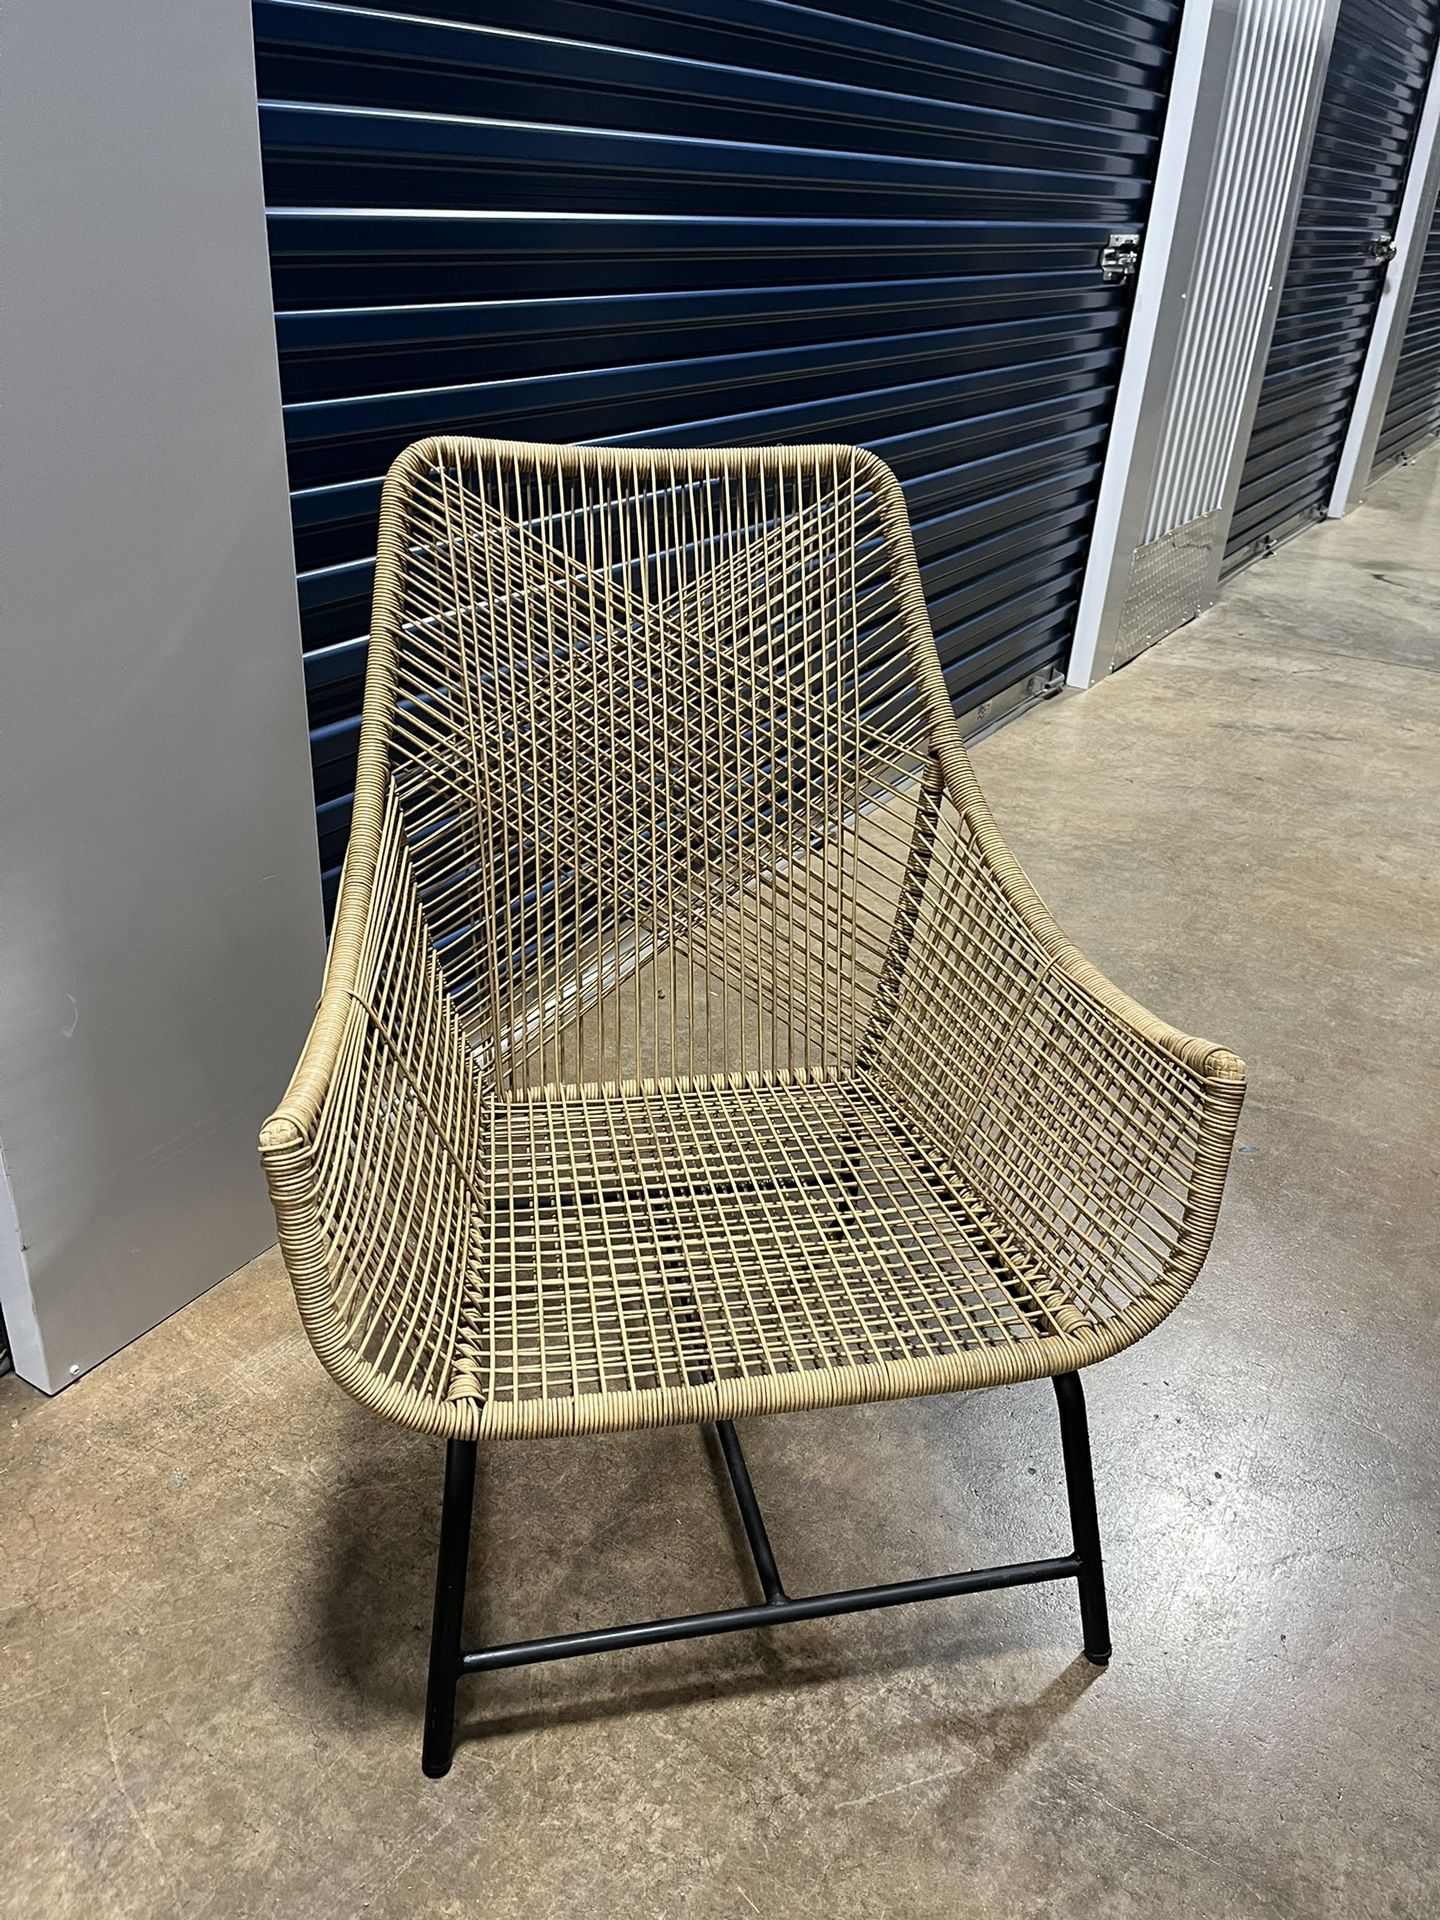 Boho style Chair 